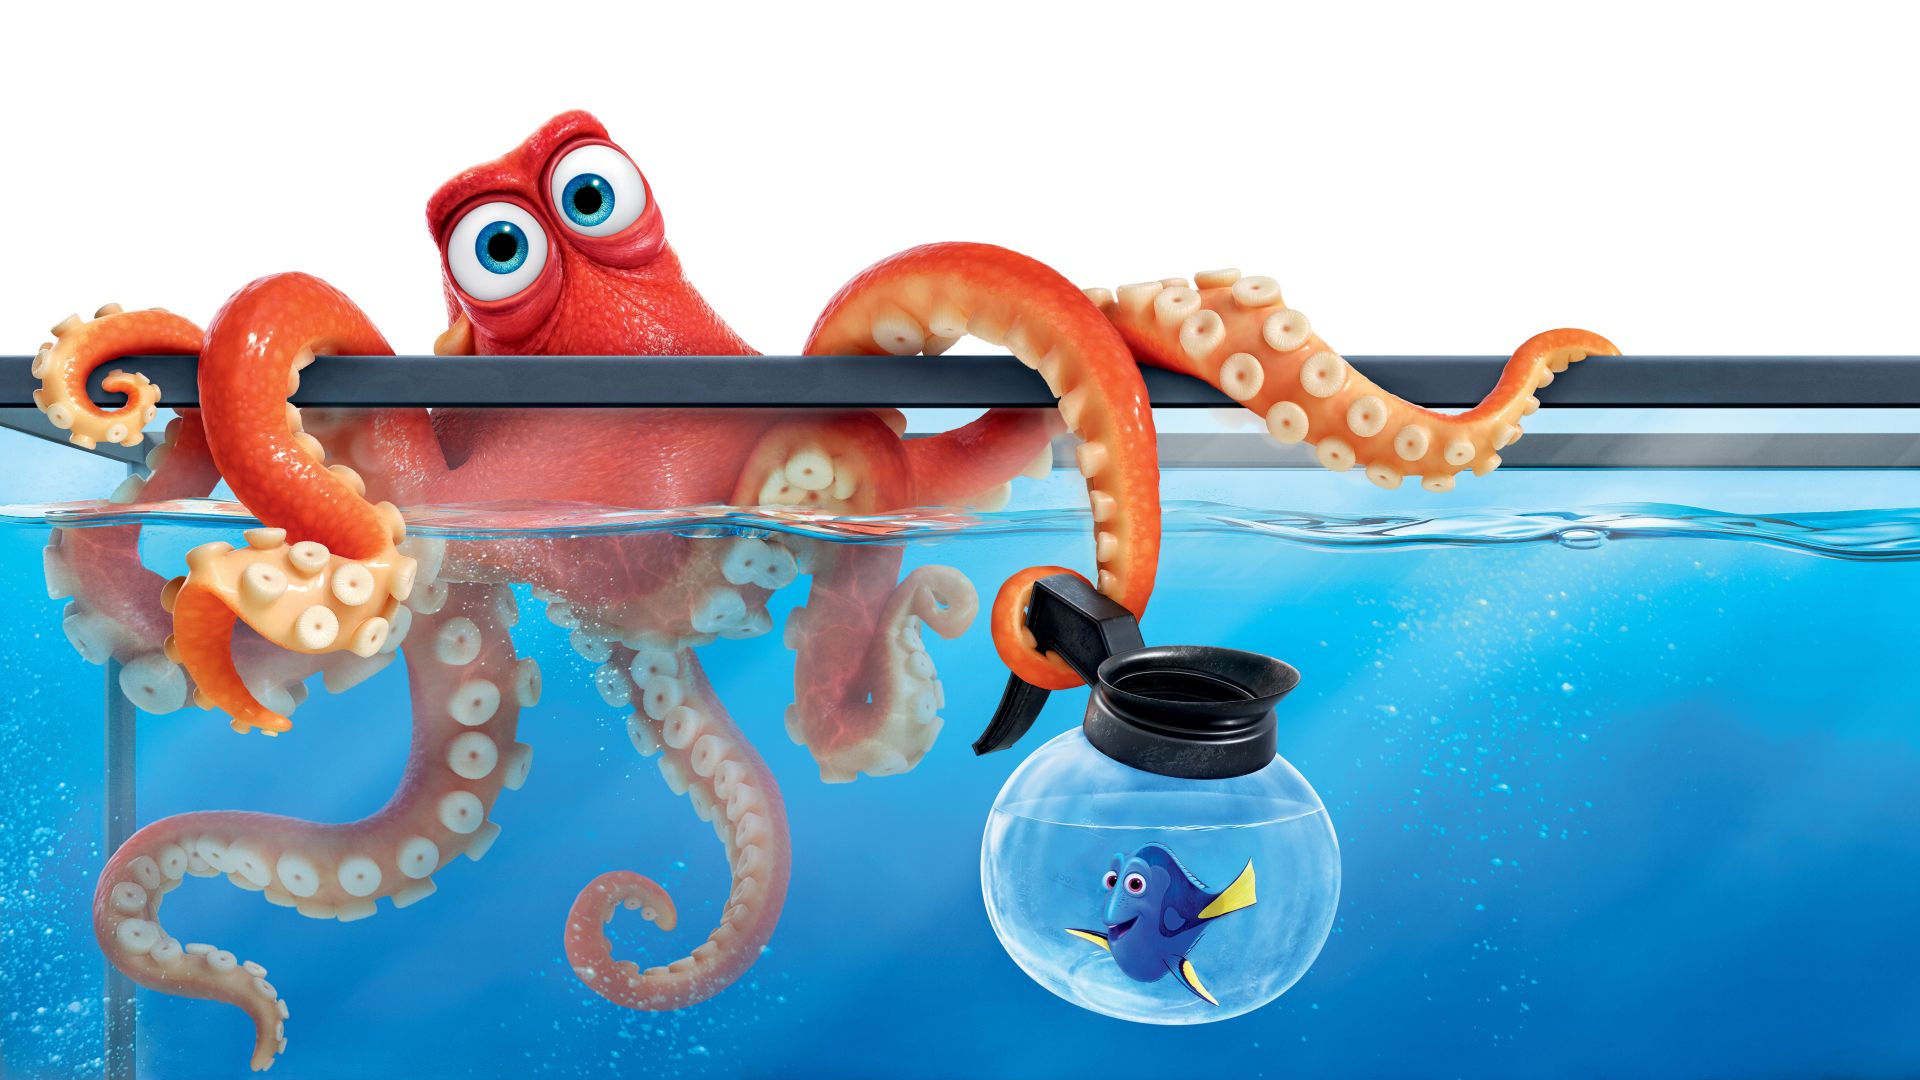 Finding Dory, hank, nemo, fish, octopus, animation (horizontal)